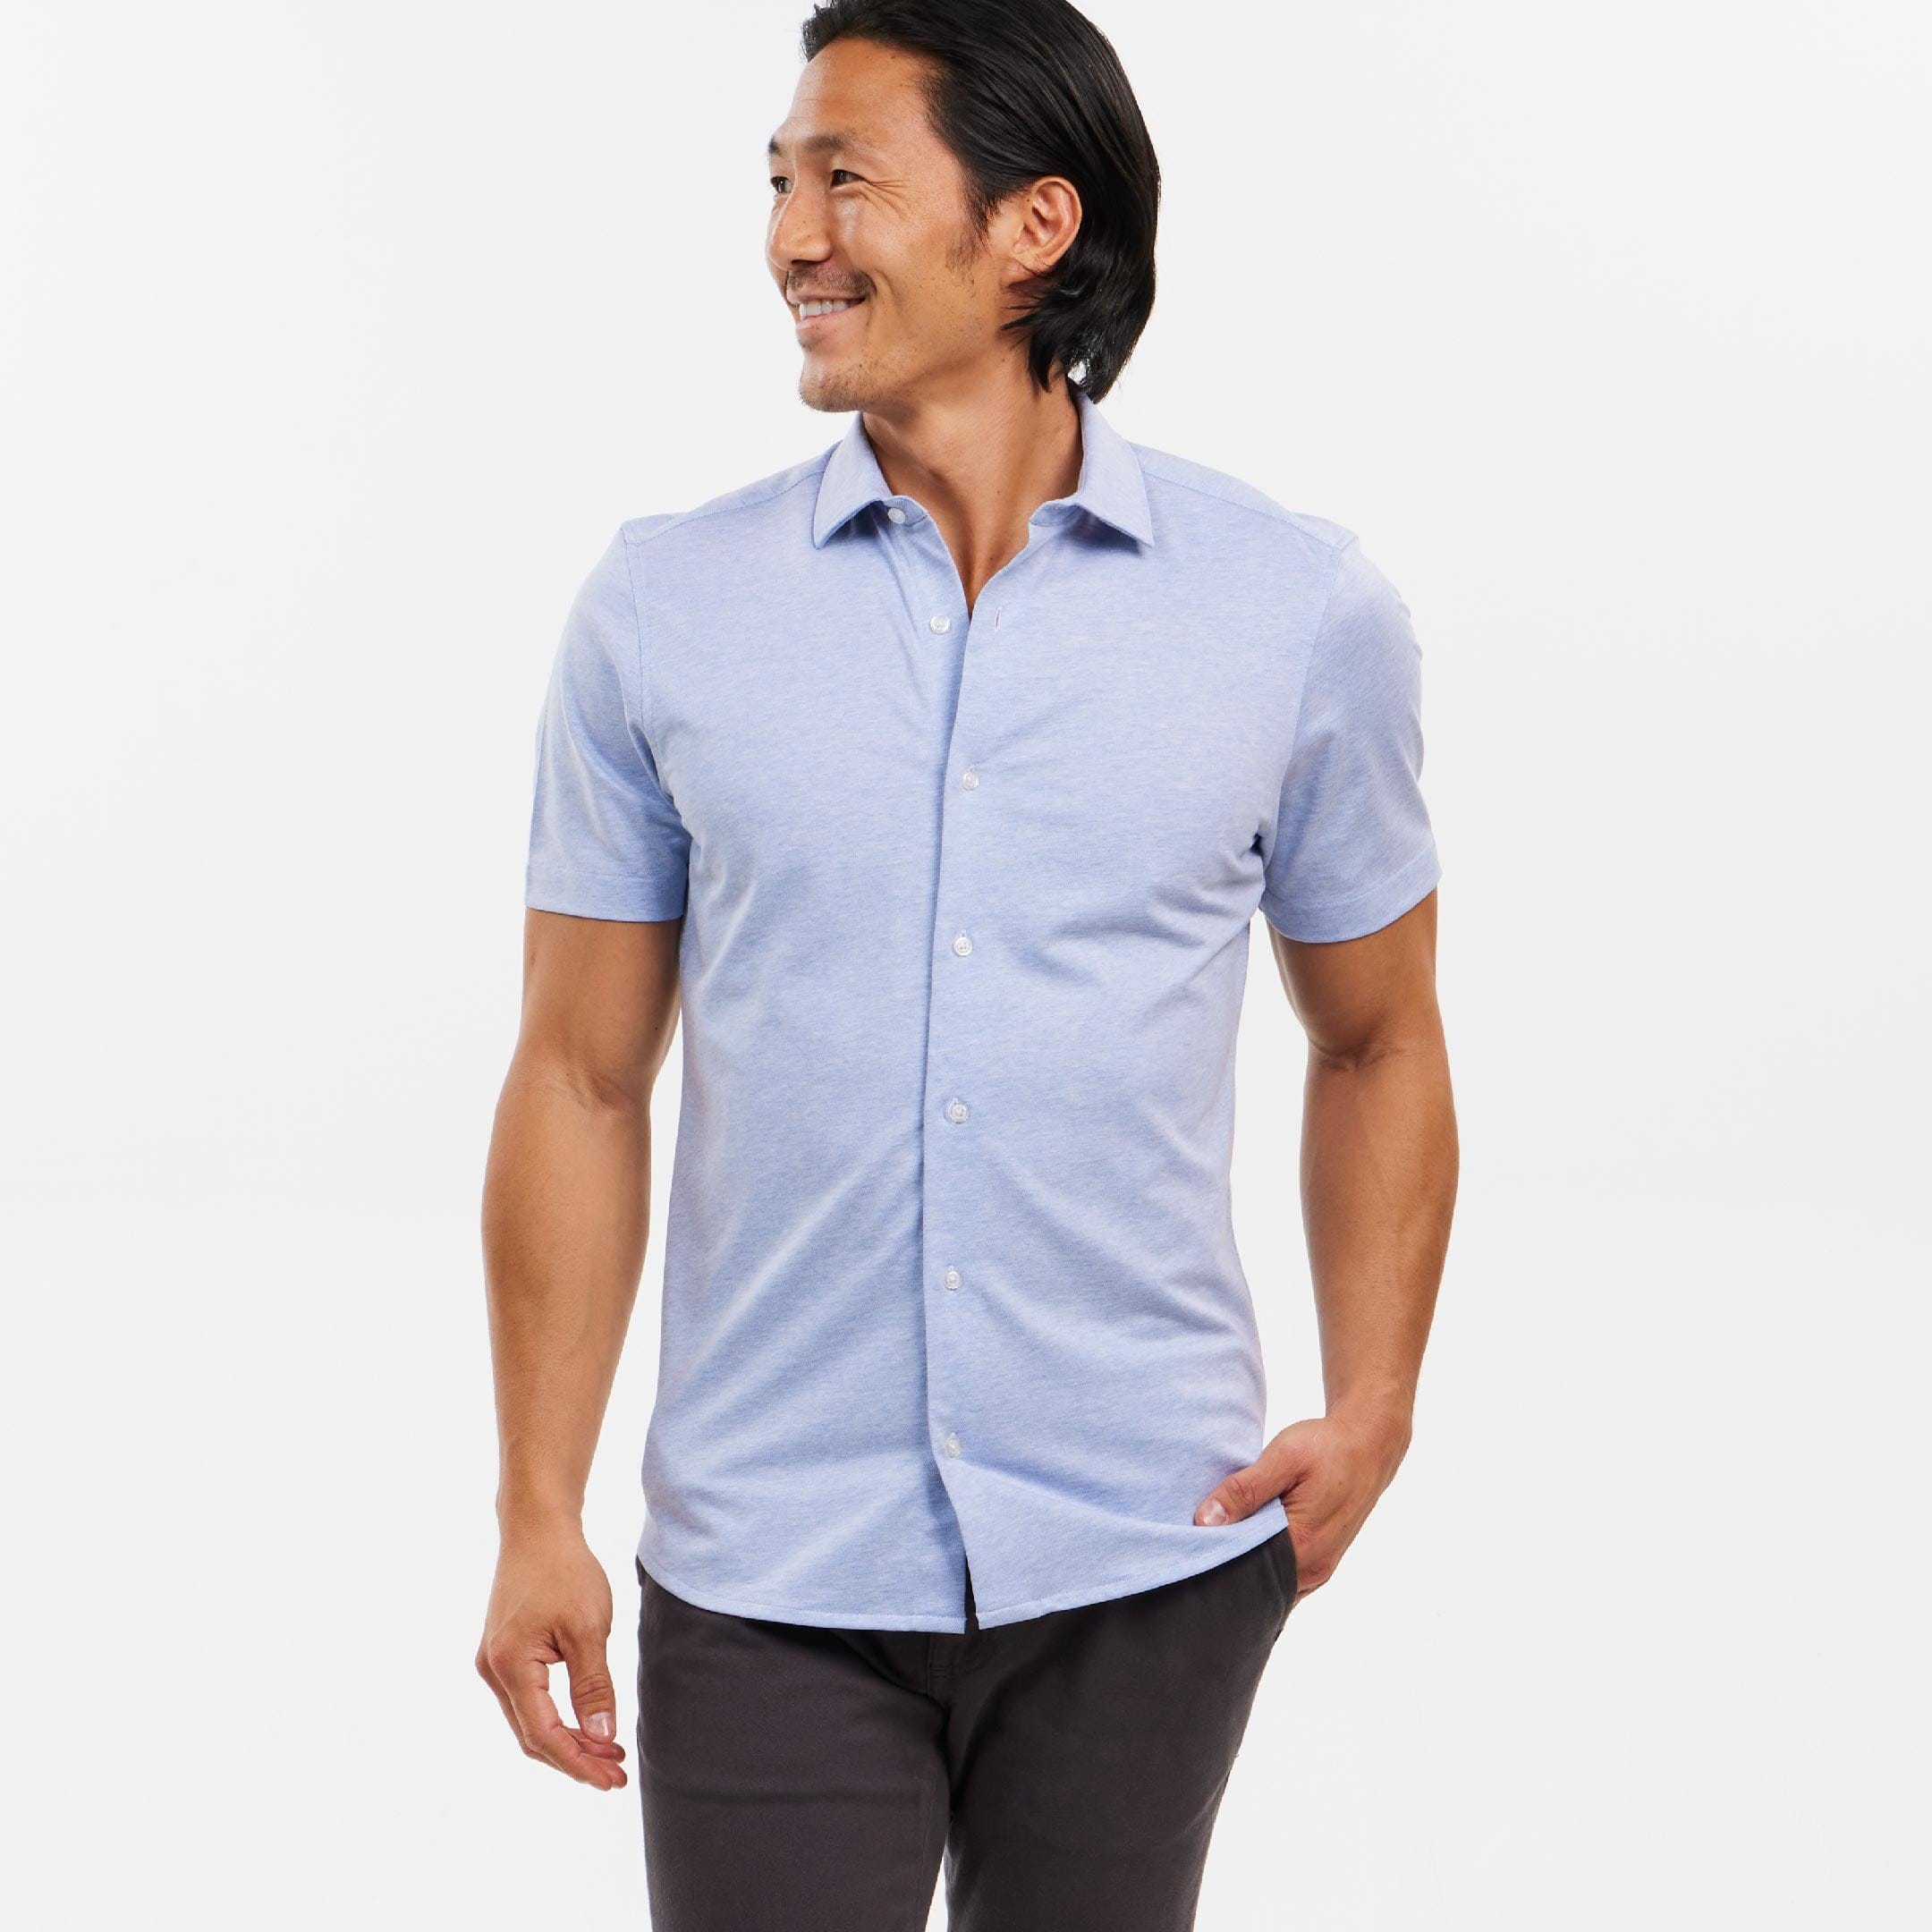 Ash & Erie Light Blue Mélange Short Sleeve Performance Stretch Shirt for Short Men   Short Sleeve Everyday Shirts